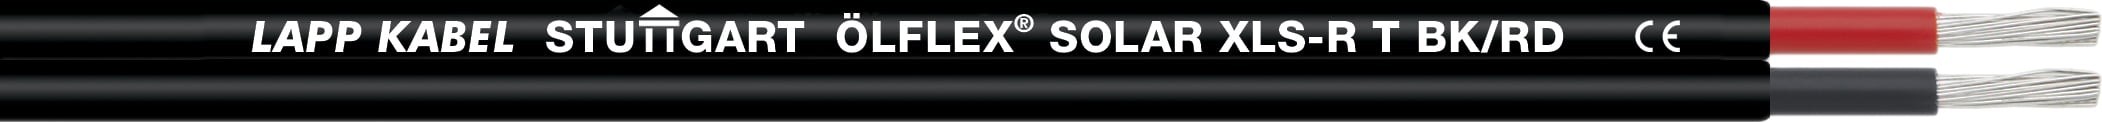 Lapp - OLFLEX SOLAR XLS-R T 2X2.5 BK-RD